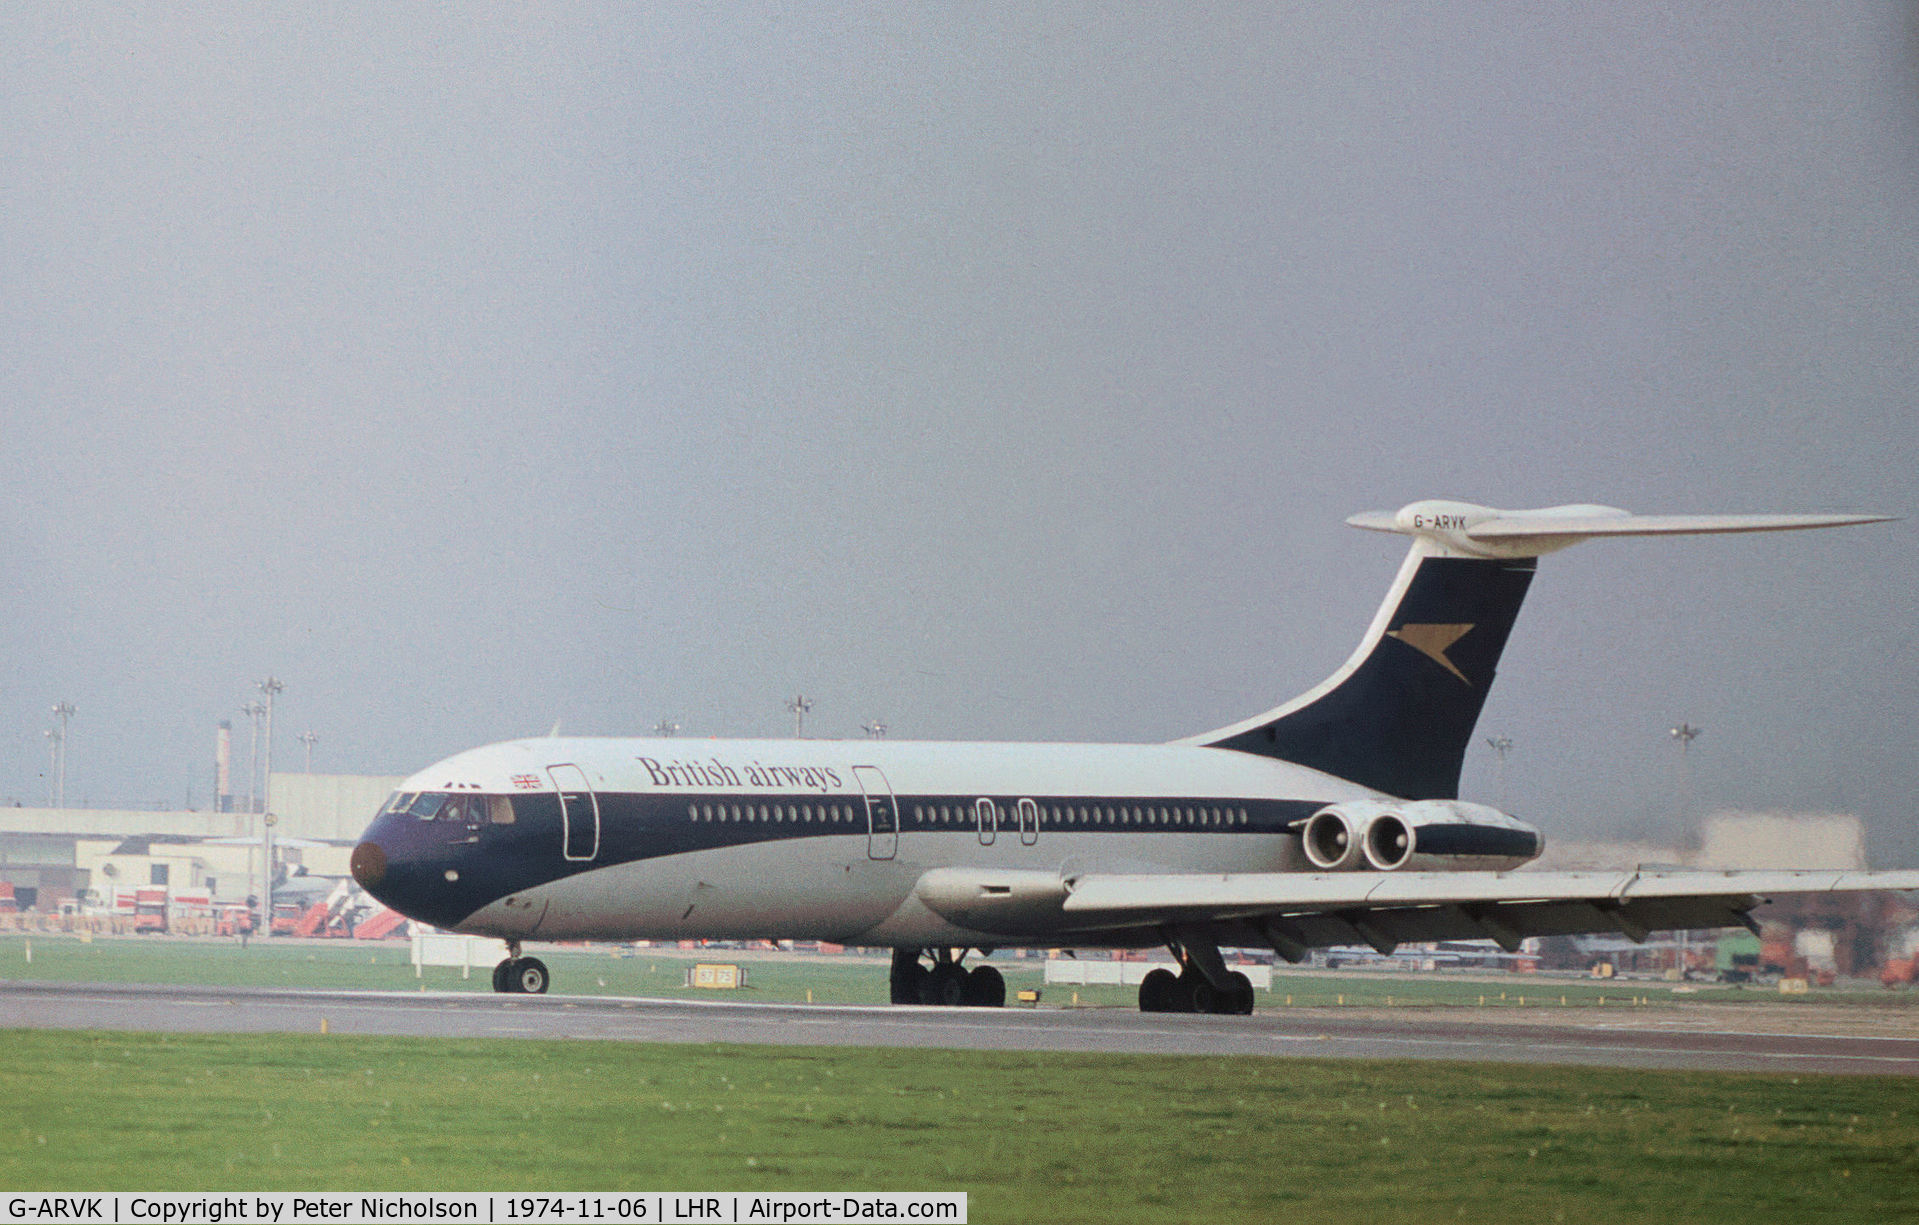 G-ARVK, 1964 Vickers VC10 Srs 1101 C/N 813, VC.10 of British Airways taxying onto Runway 27L at Heathrow in November 1974 - still wearing former BOAC markings.